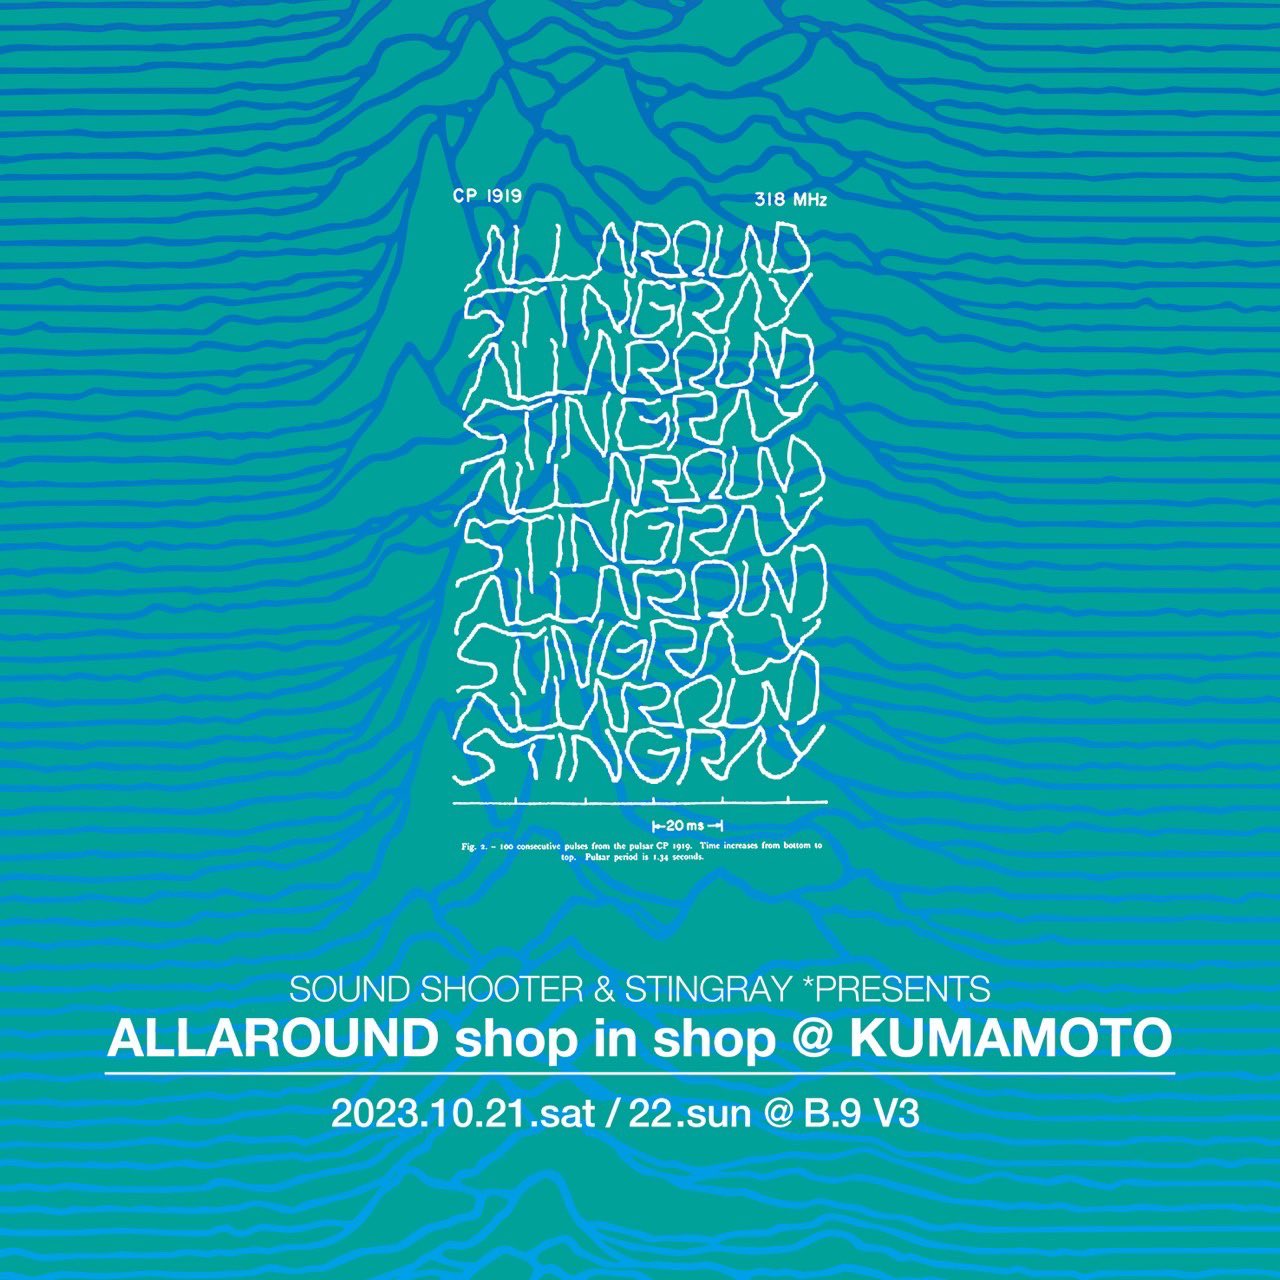 ALLAROUND shop in shop @KUMAMOTO